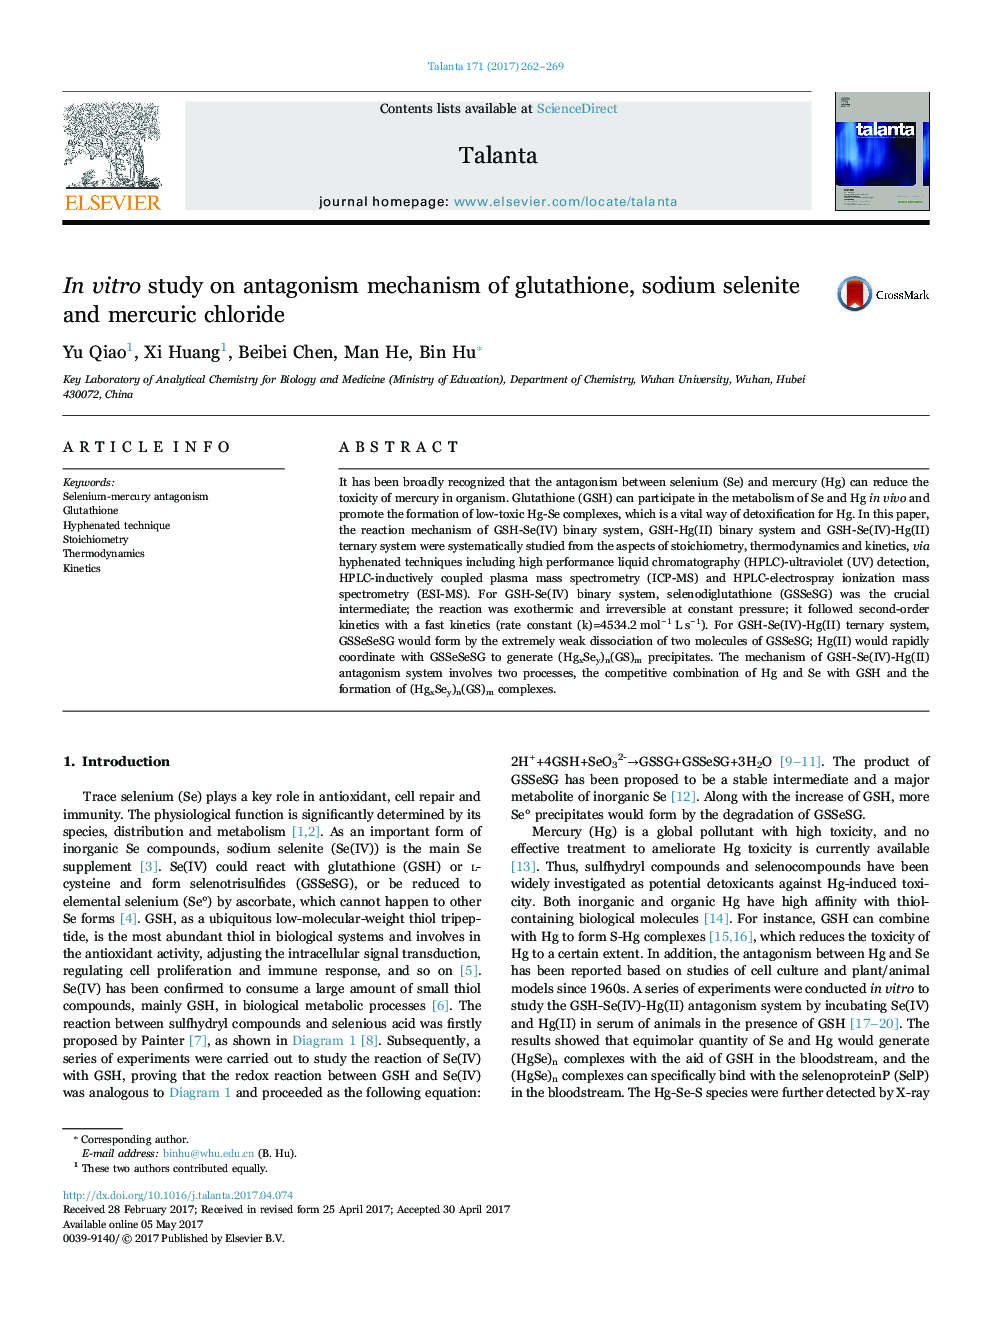 In vitro study on antagonism mechanism of glutathione, sodium selenite and mercuric chloride